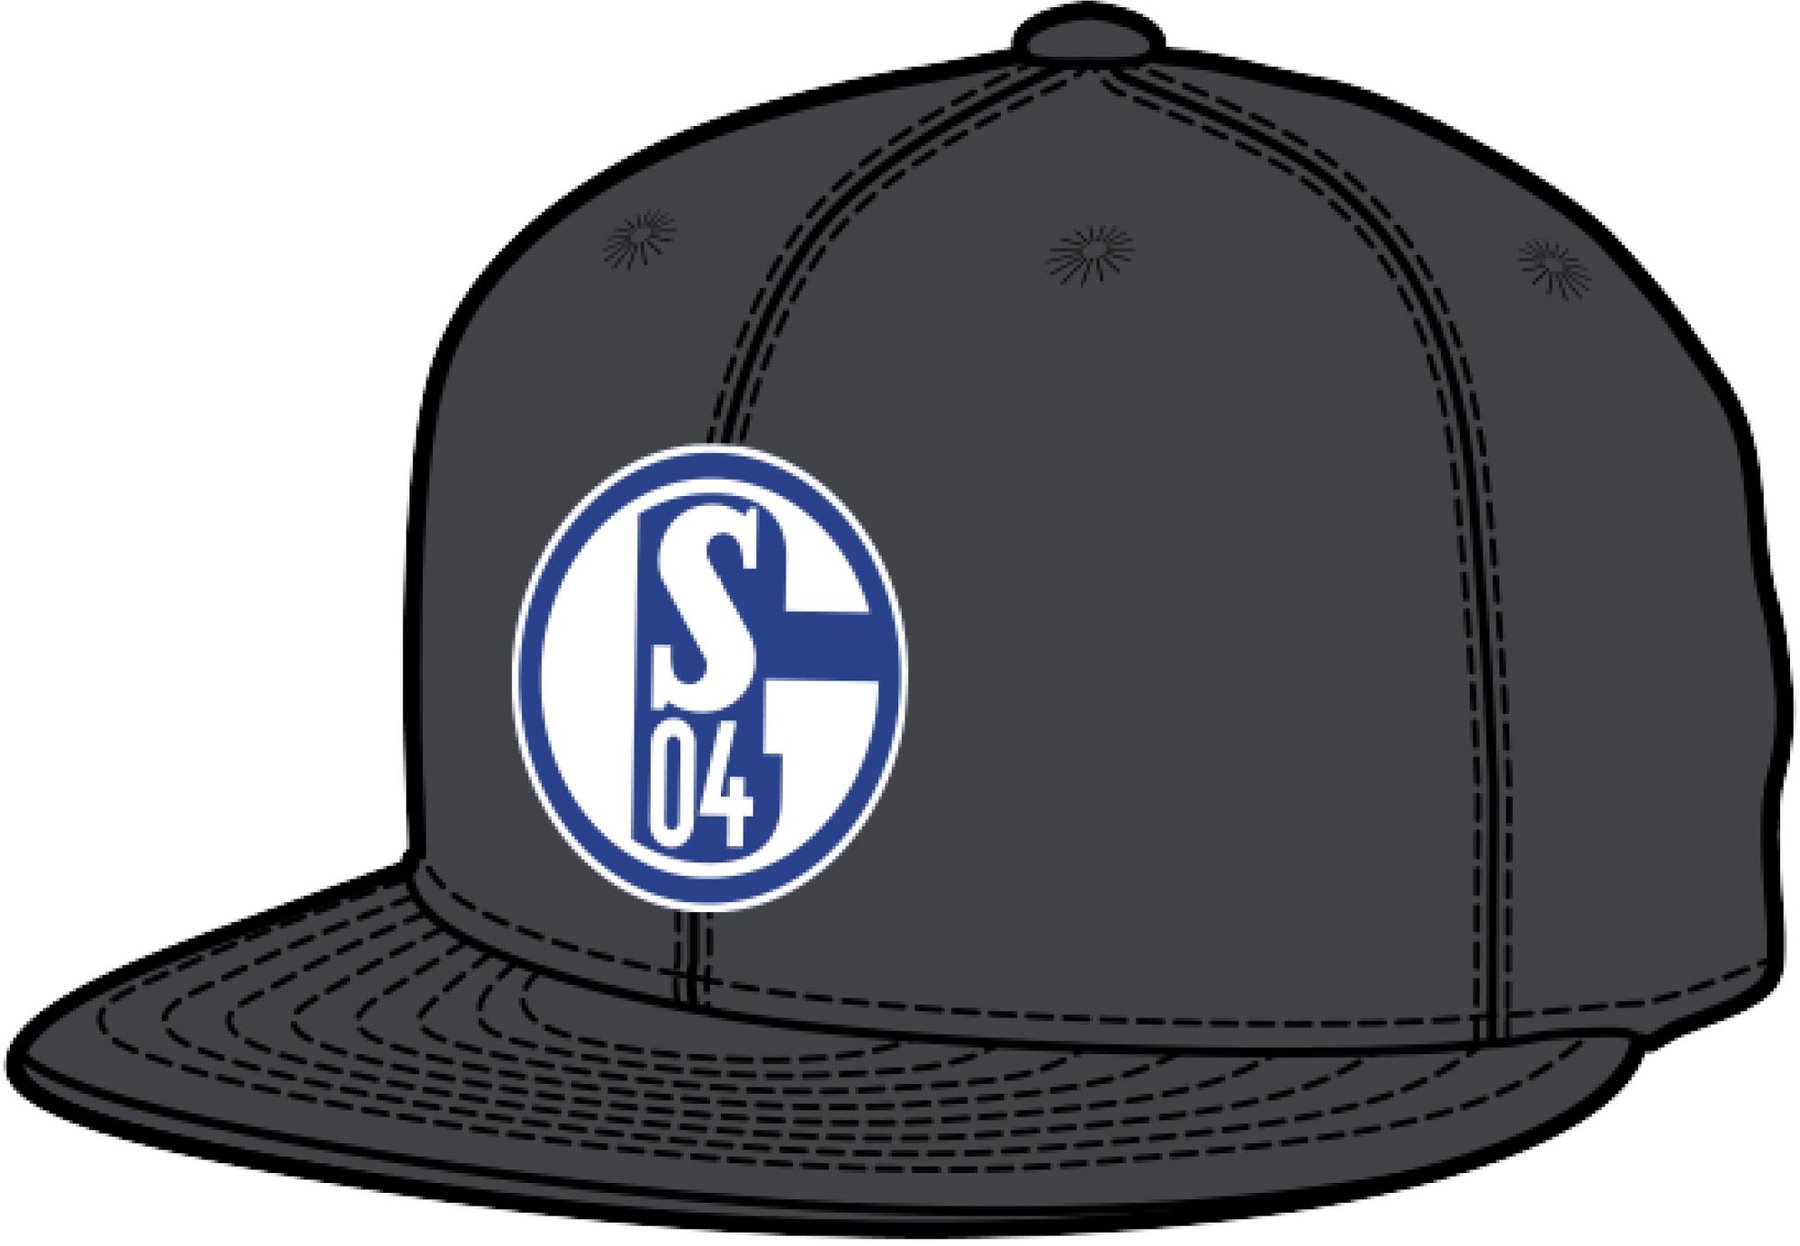 Wendemütze grau schwarz FC Schalke 04 Mütze Cap Fanmütze New Era Königsblau